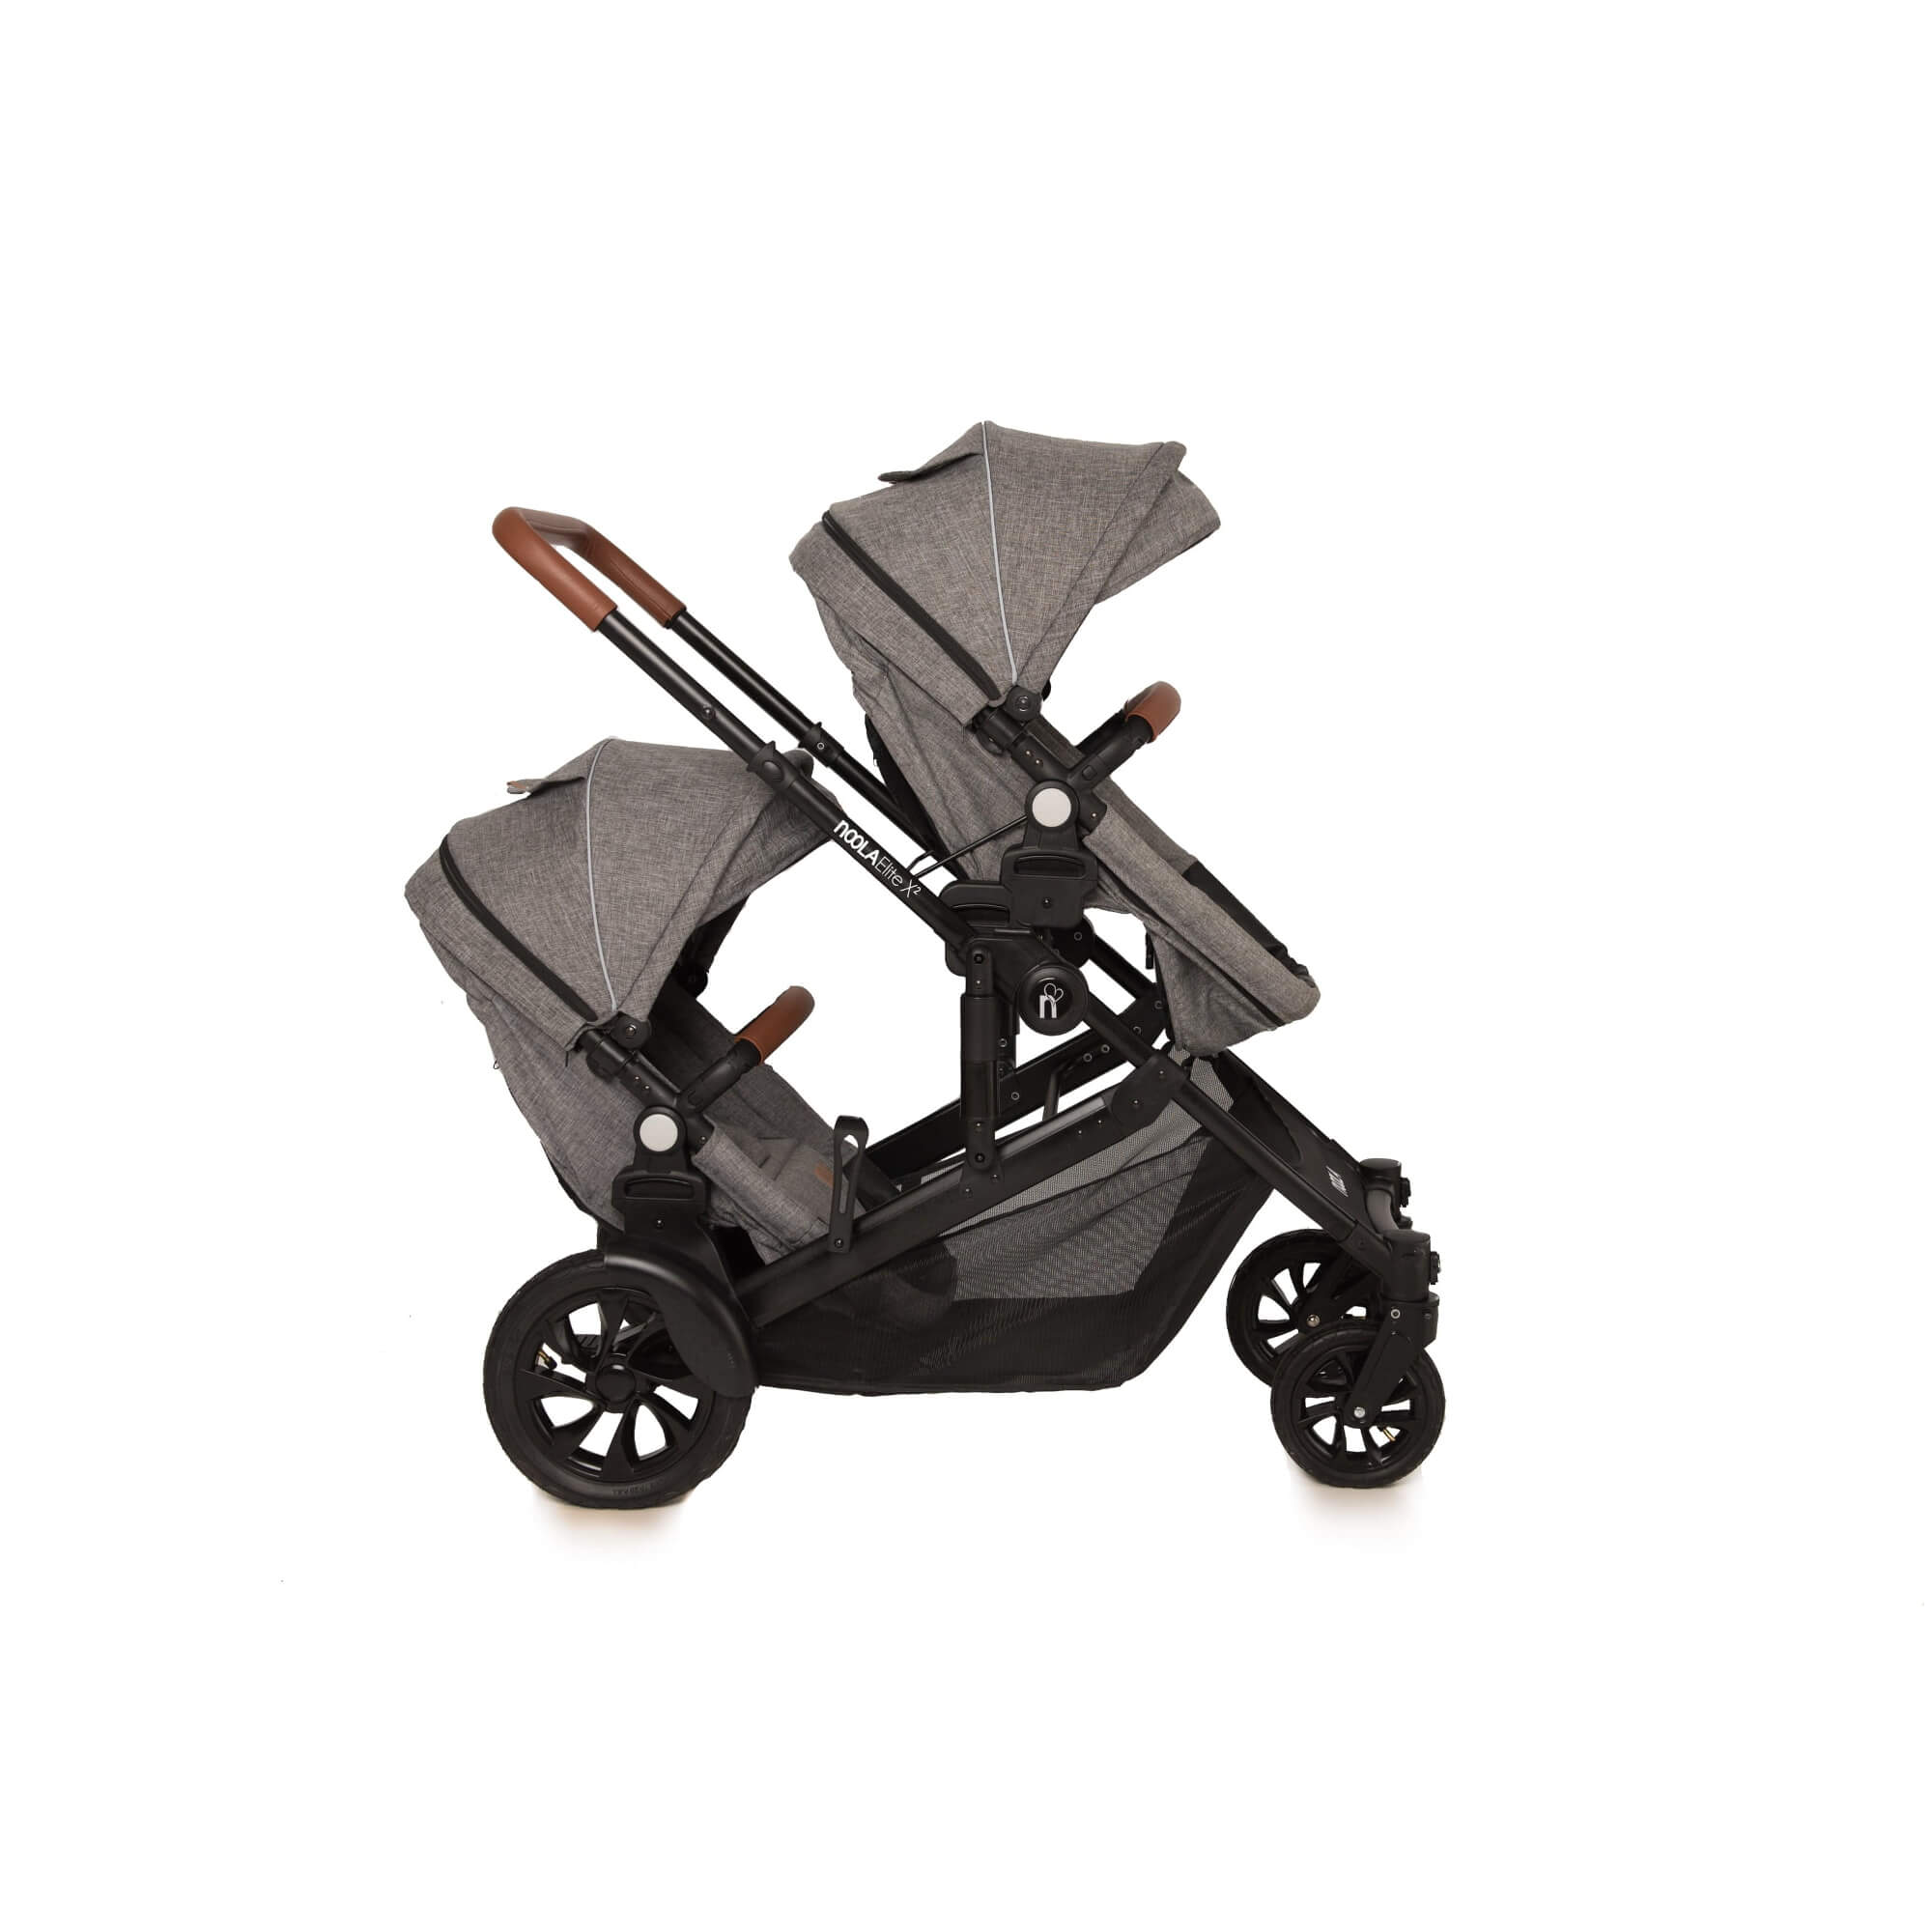 noola elitex2 8in1 twin travel system lunar grey baby stroller